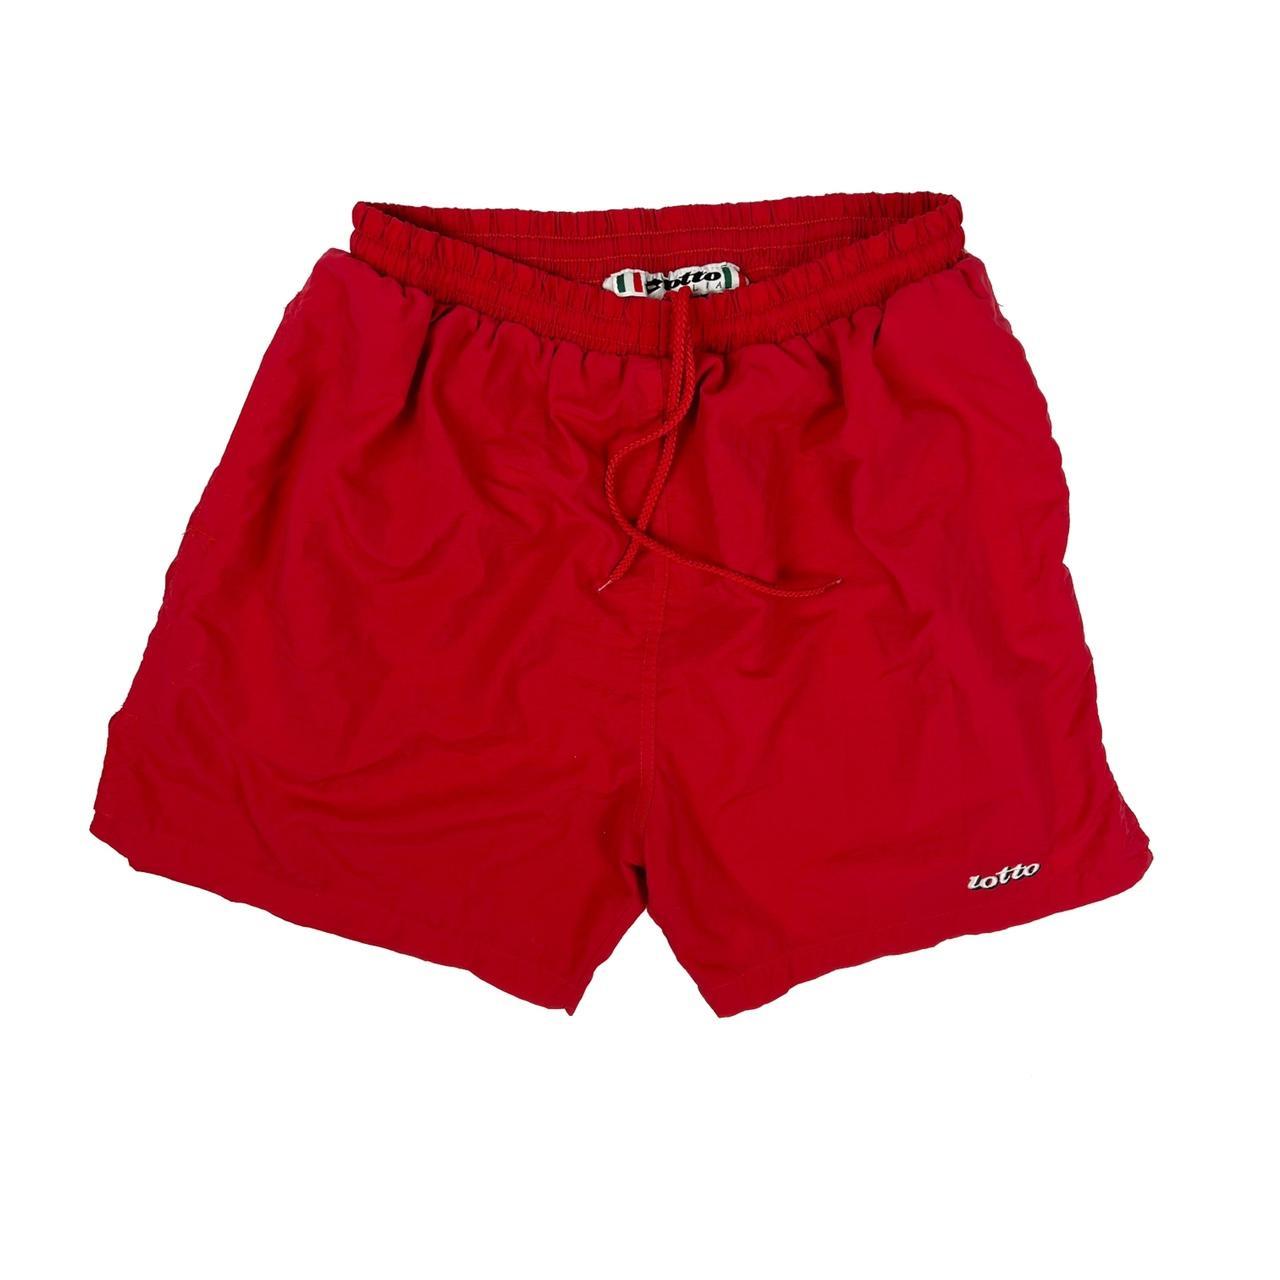 Lotto Men's Red Shorts | Depop